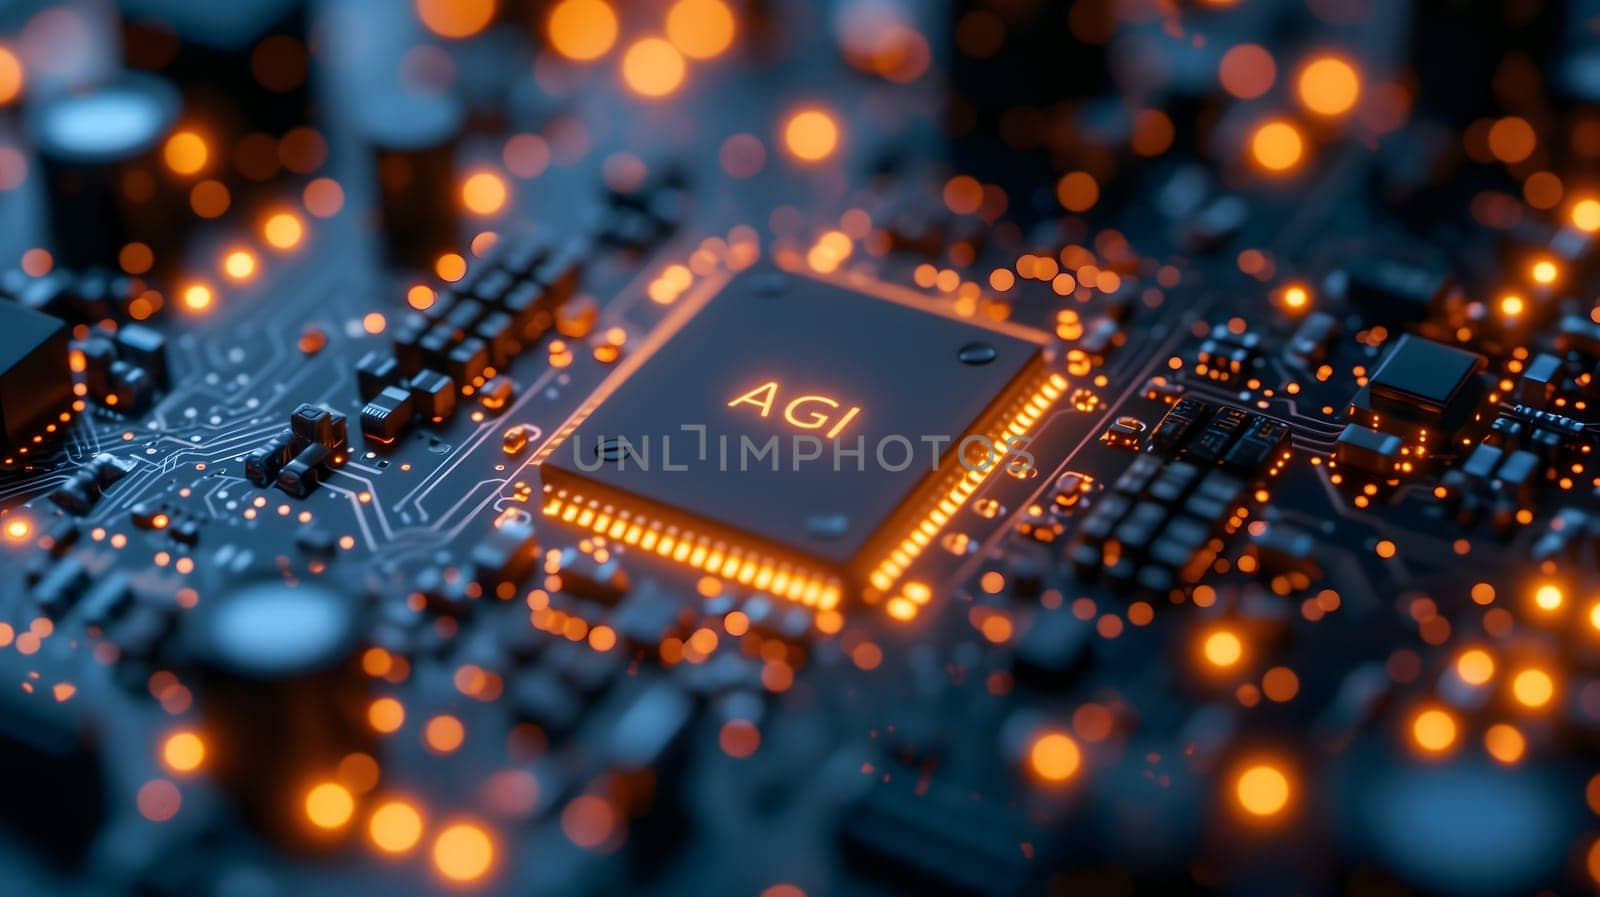 AGI - artificial general intelligence - microchip on black circuit board with orange glow by z1b